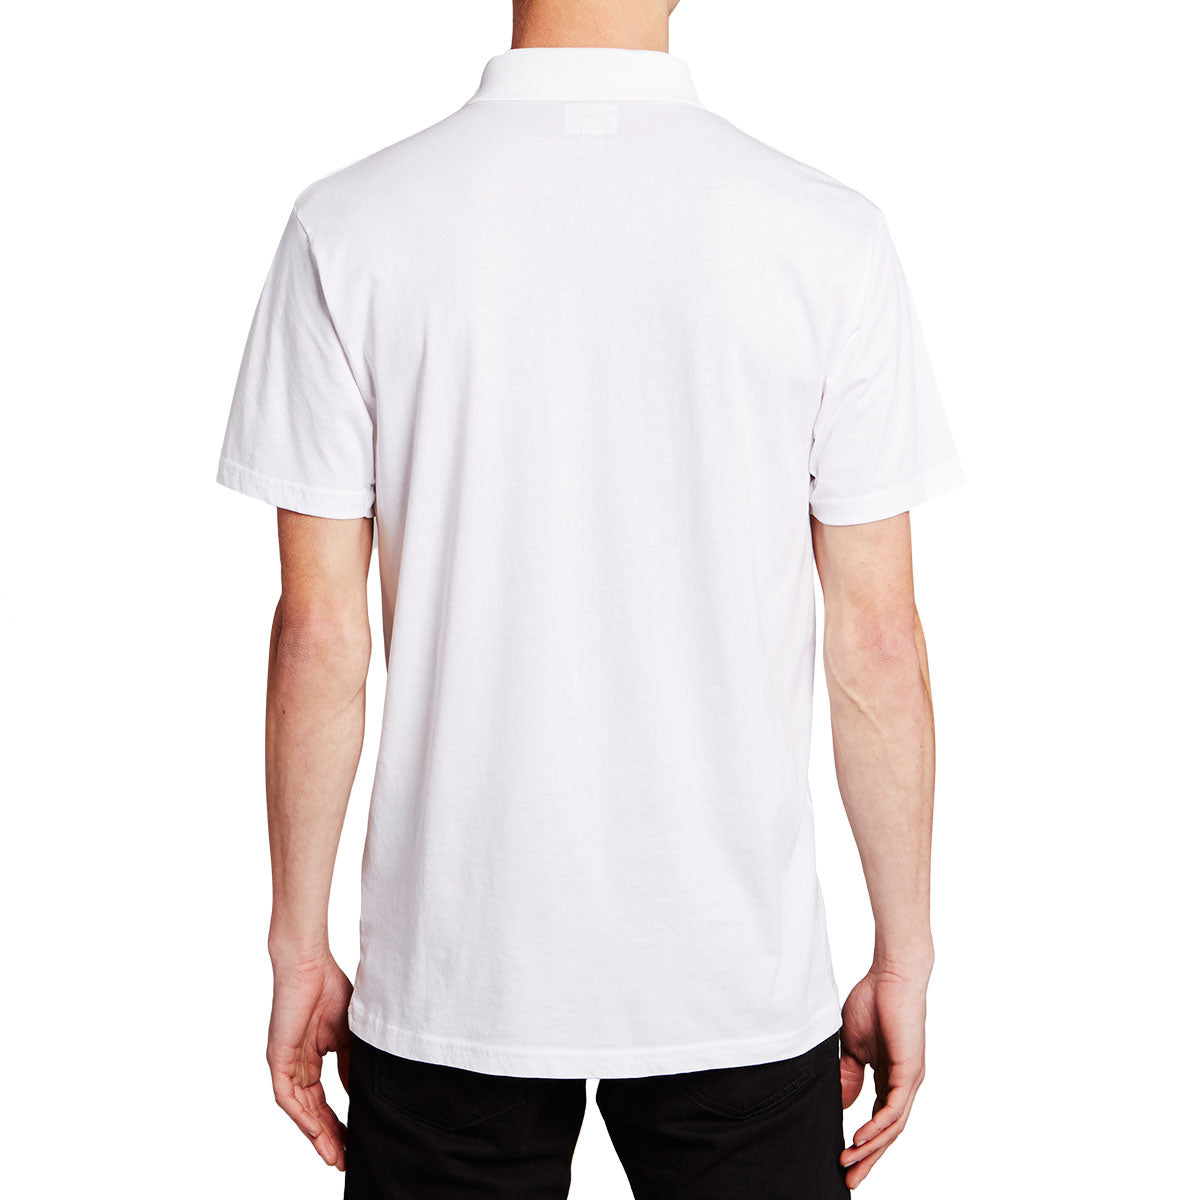 CCS Nested Polo Shirt - White image 2